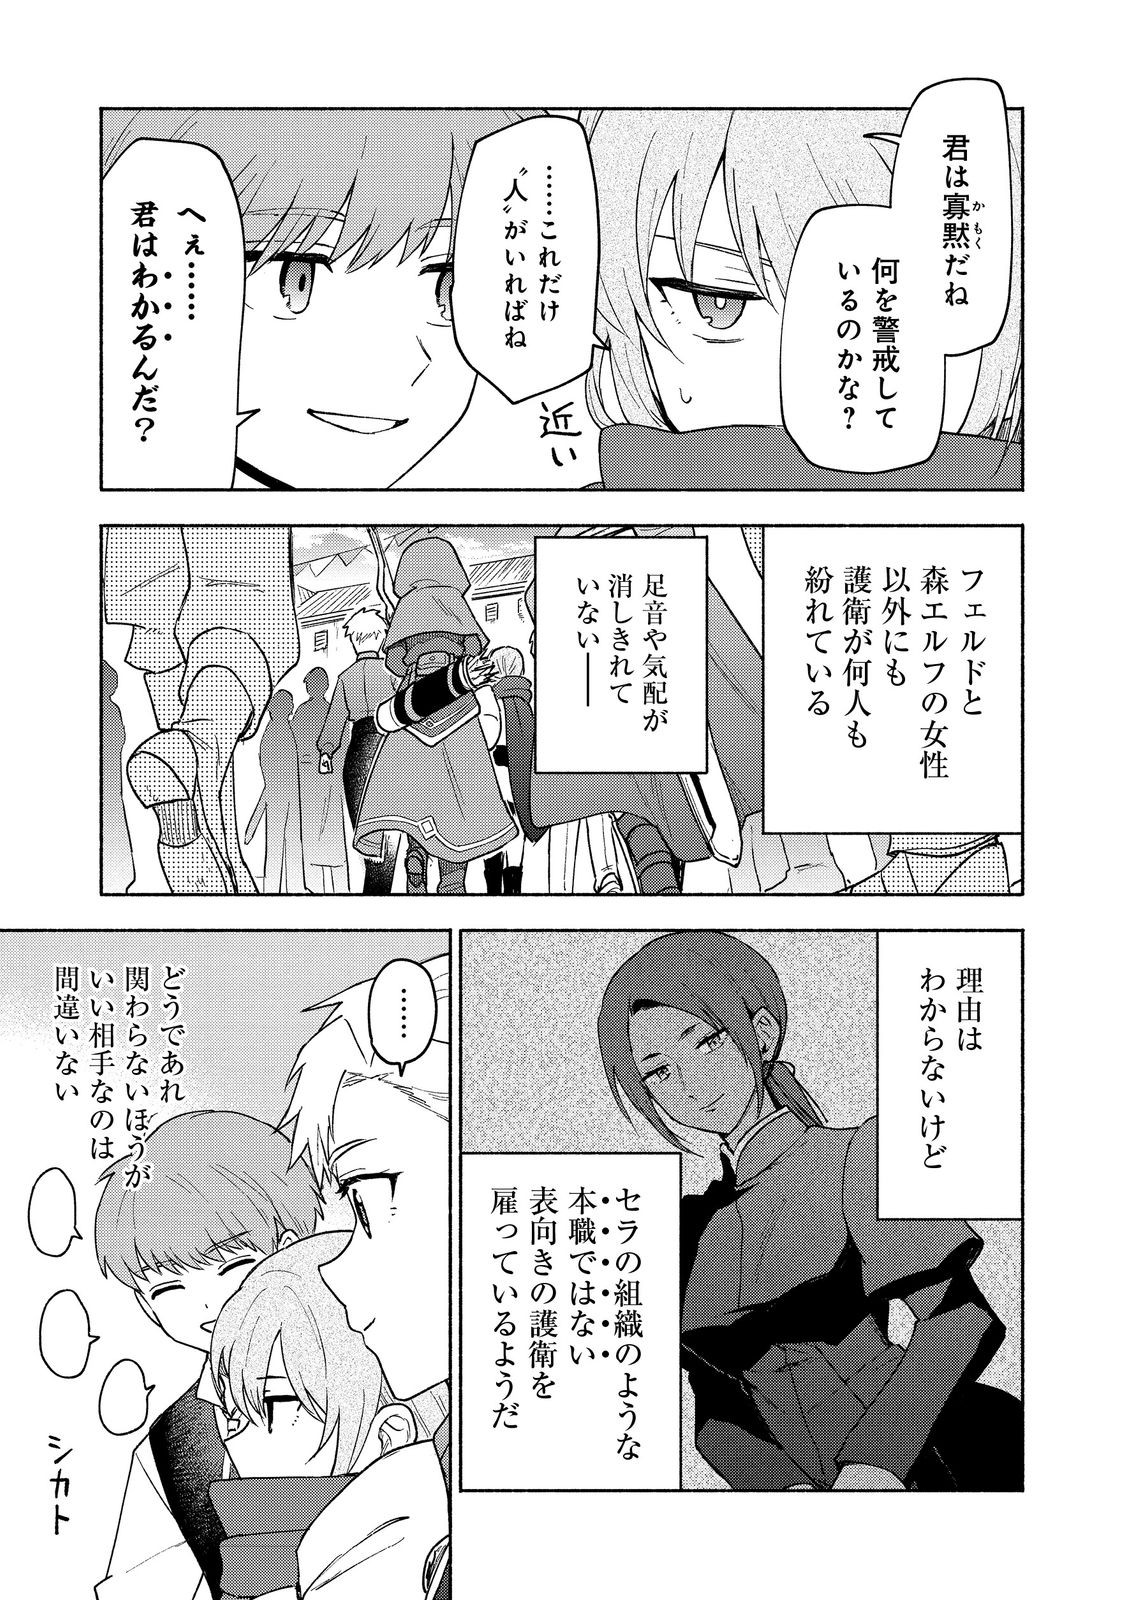 Otome Game no Heroine de Saikyou Survival - Chapter 22 - Page 11